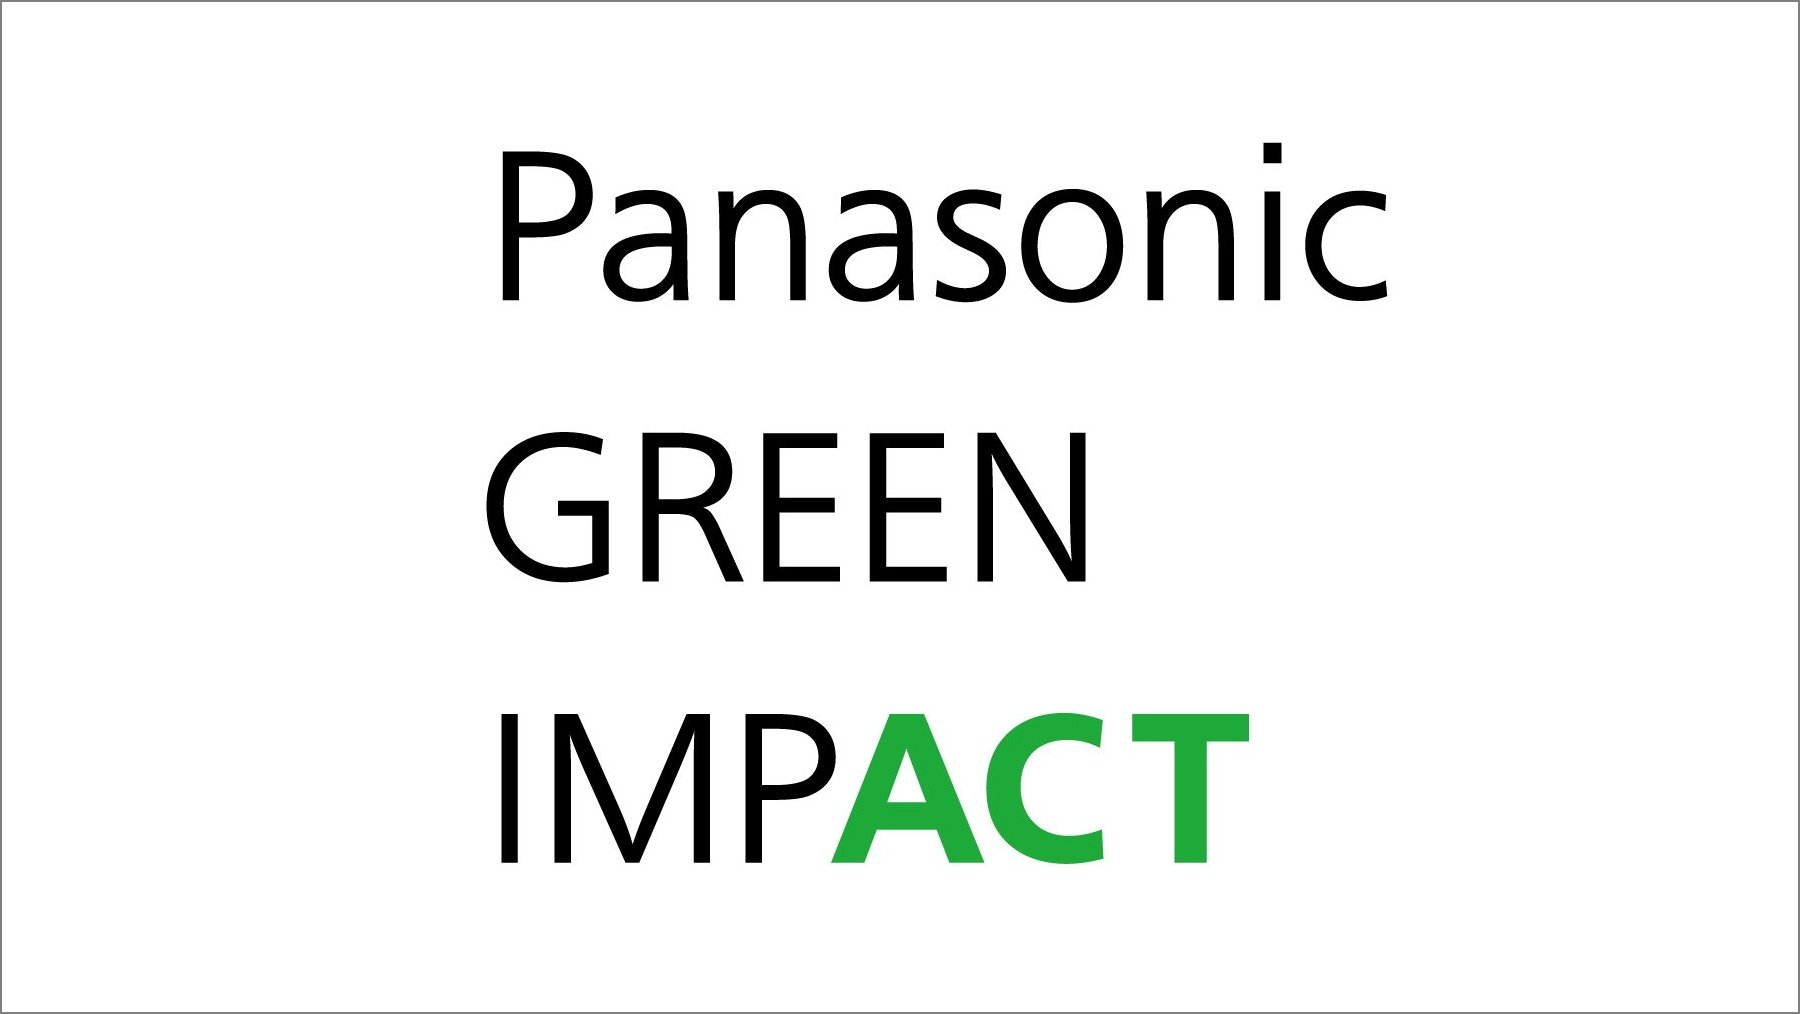 「Panasonic GREEN IMPACT」ロゴ